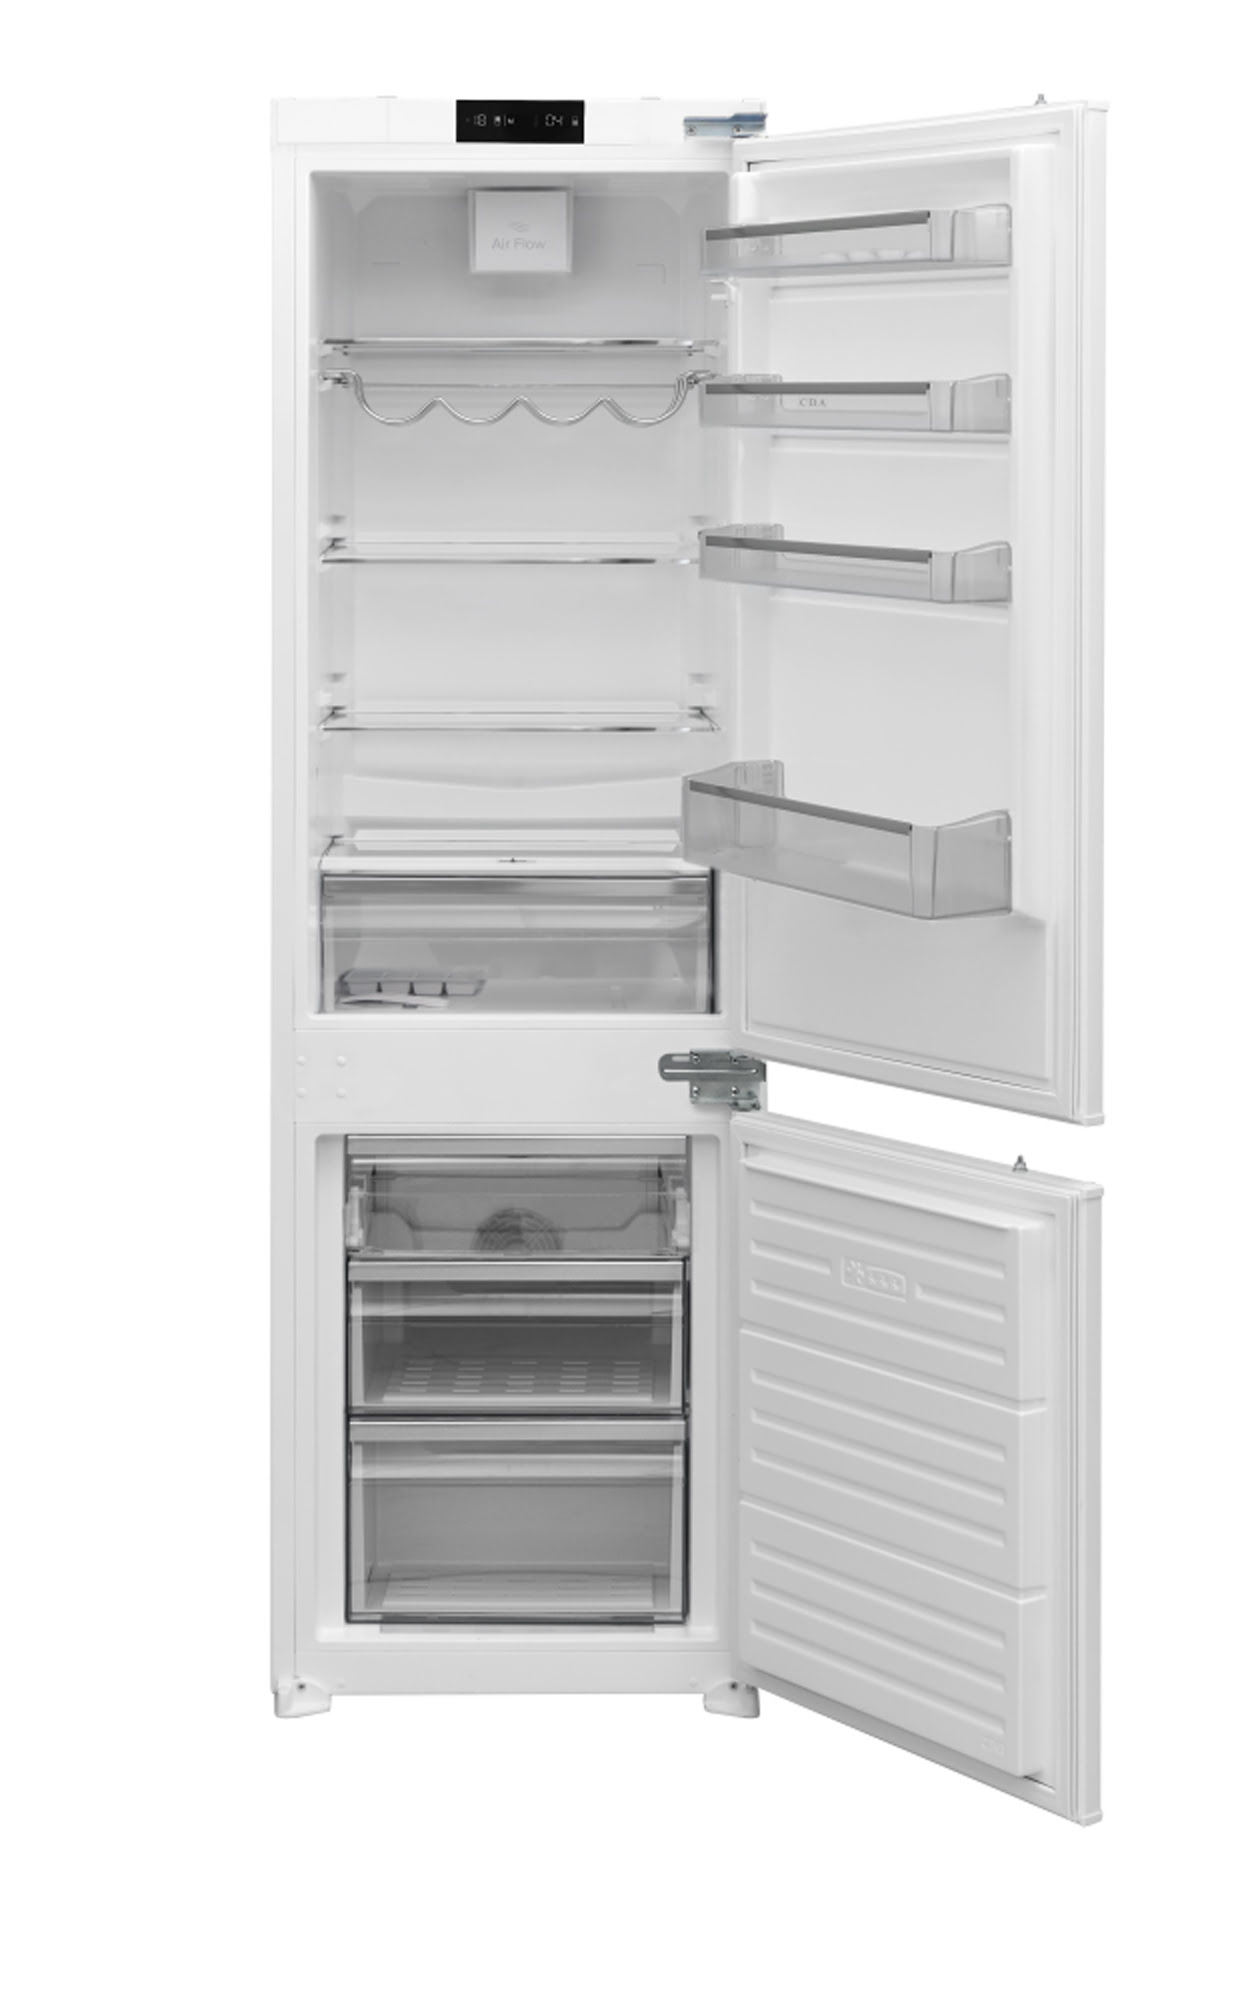 Integrated 70/30 fridge freezer